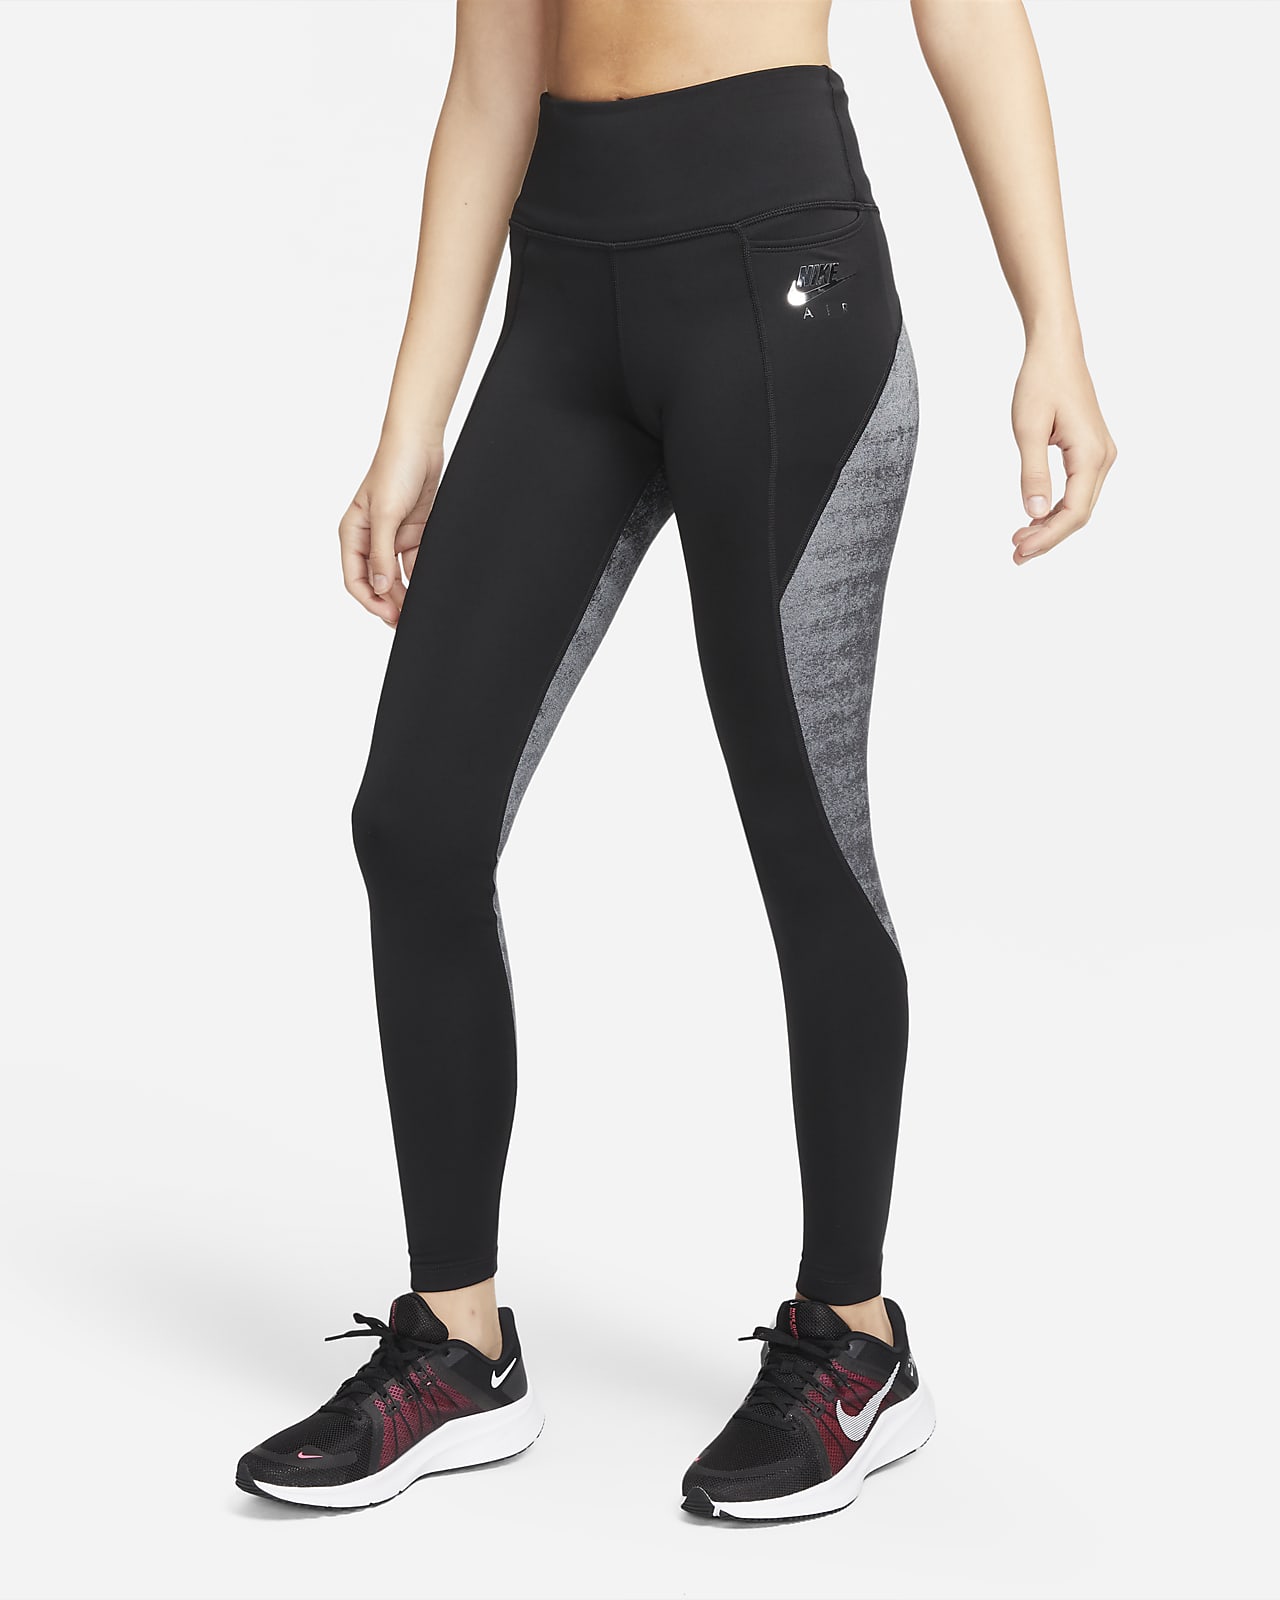 Nike Air Dri-FIT Fast-løbeleggings til kvinder med lommer